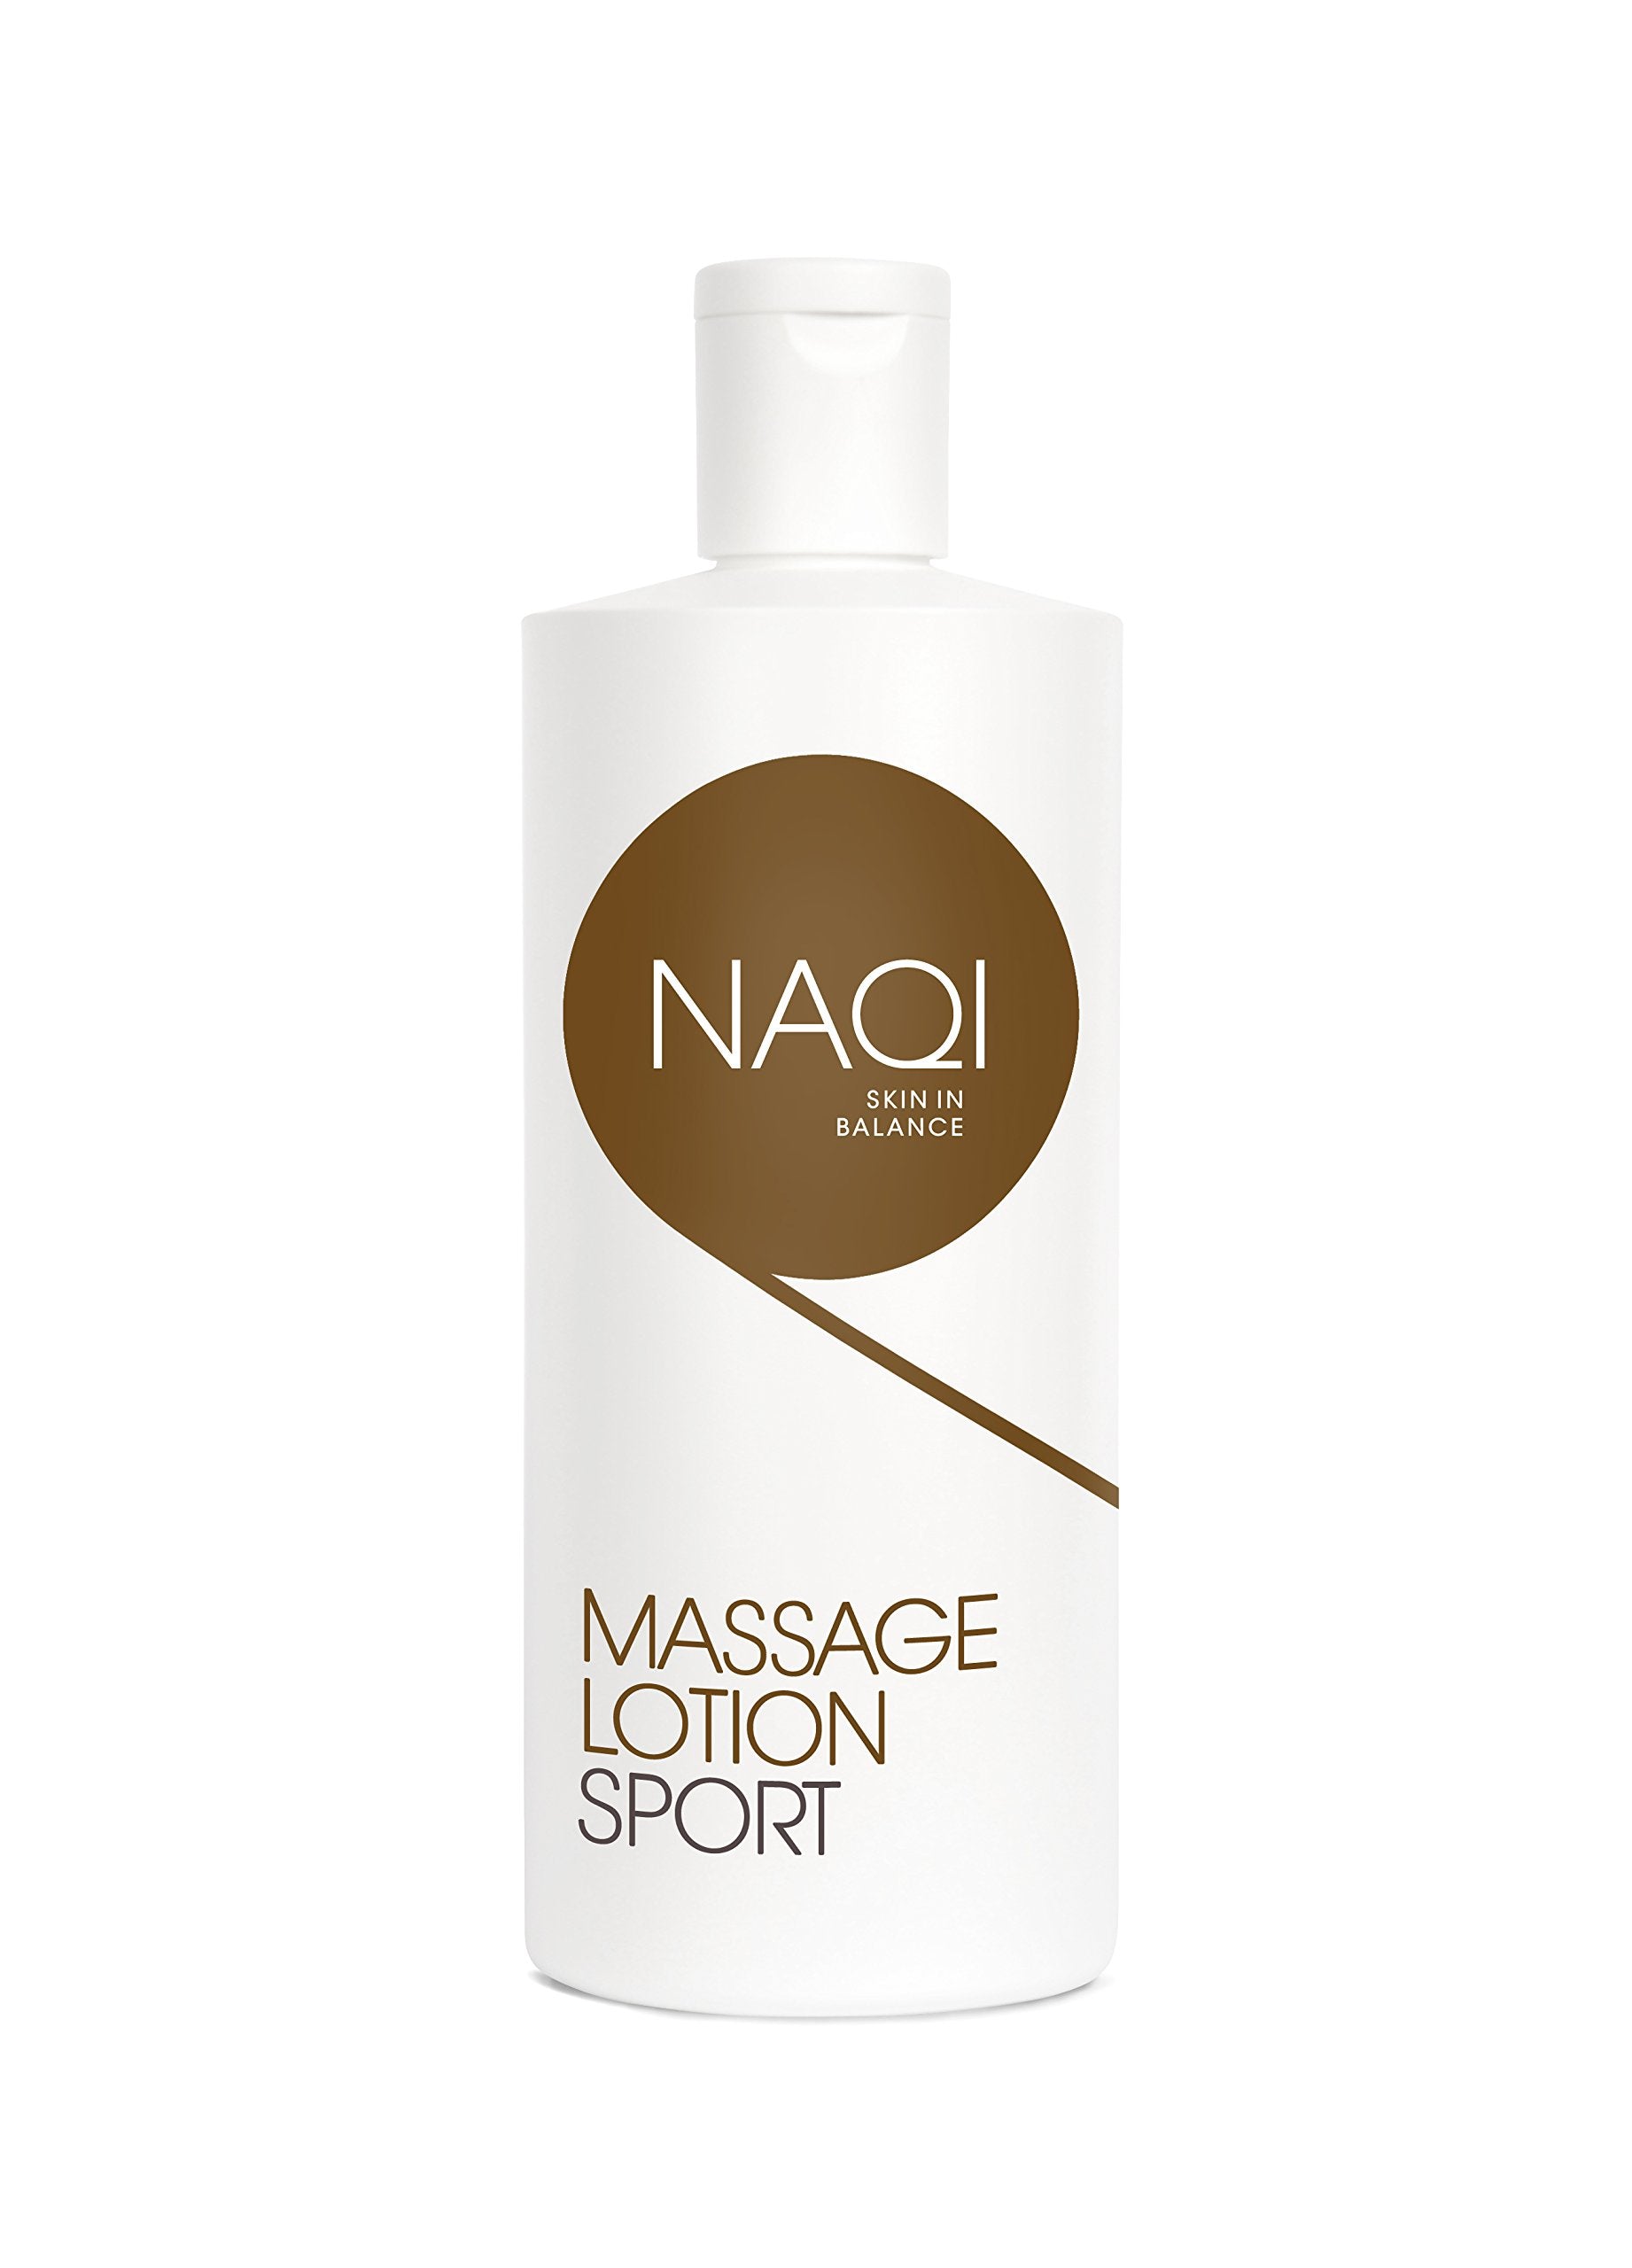 NAQI Massage Lotion, Sports Massage Lotion, Oil-Rich Massage Lotion Provides Intense Hydration, Pre/Post-Workout Treatment, Enhanced Recovery & Performance, 1 x 500ml